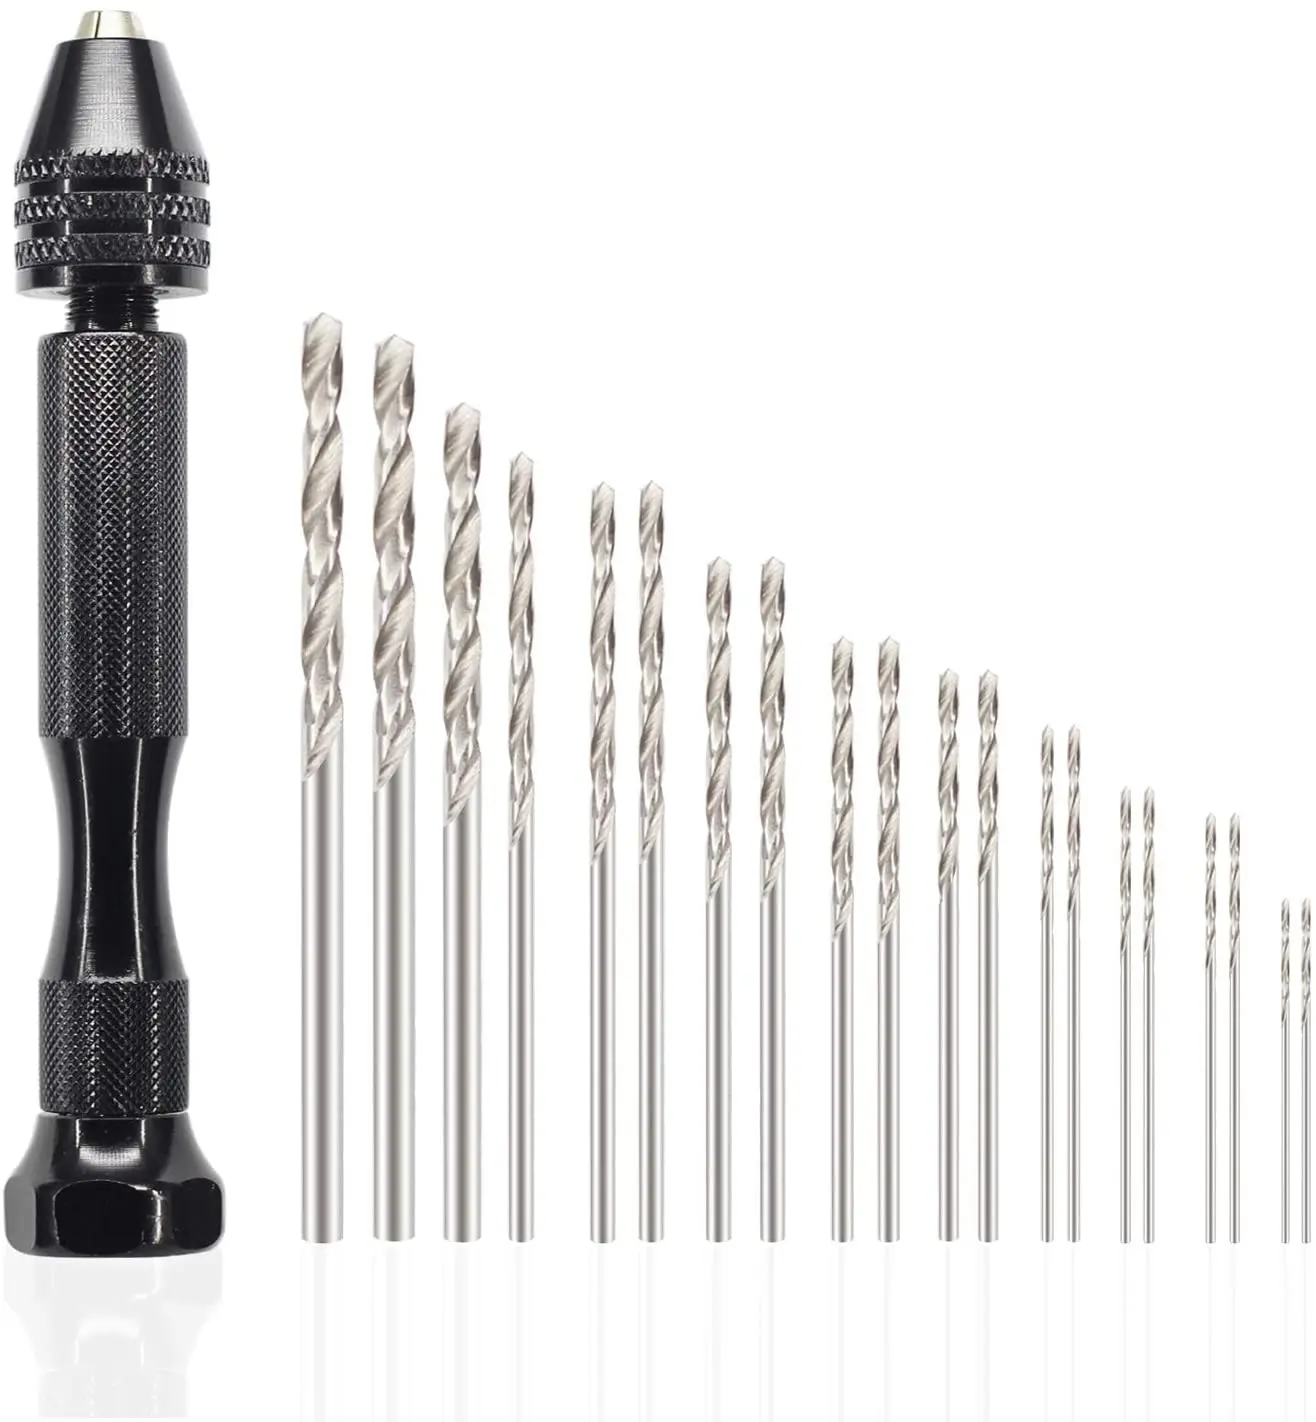 EnPoint™ Precision 20PCS DIY Micro Twist Drill Bits Set for Pin Vise HSS High Speed Steel Mini Drill Bit 0.3-1.6MM Shank Kit Hand Tools for Model Resin Jewelry Walnut Amber Olive Nut 